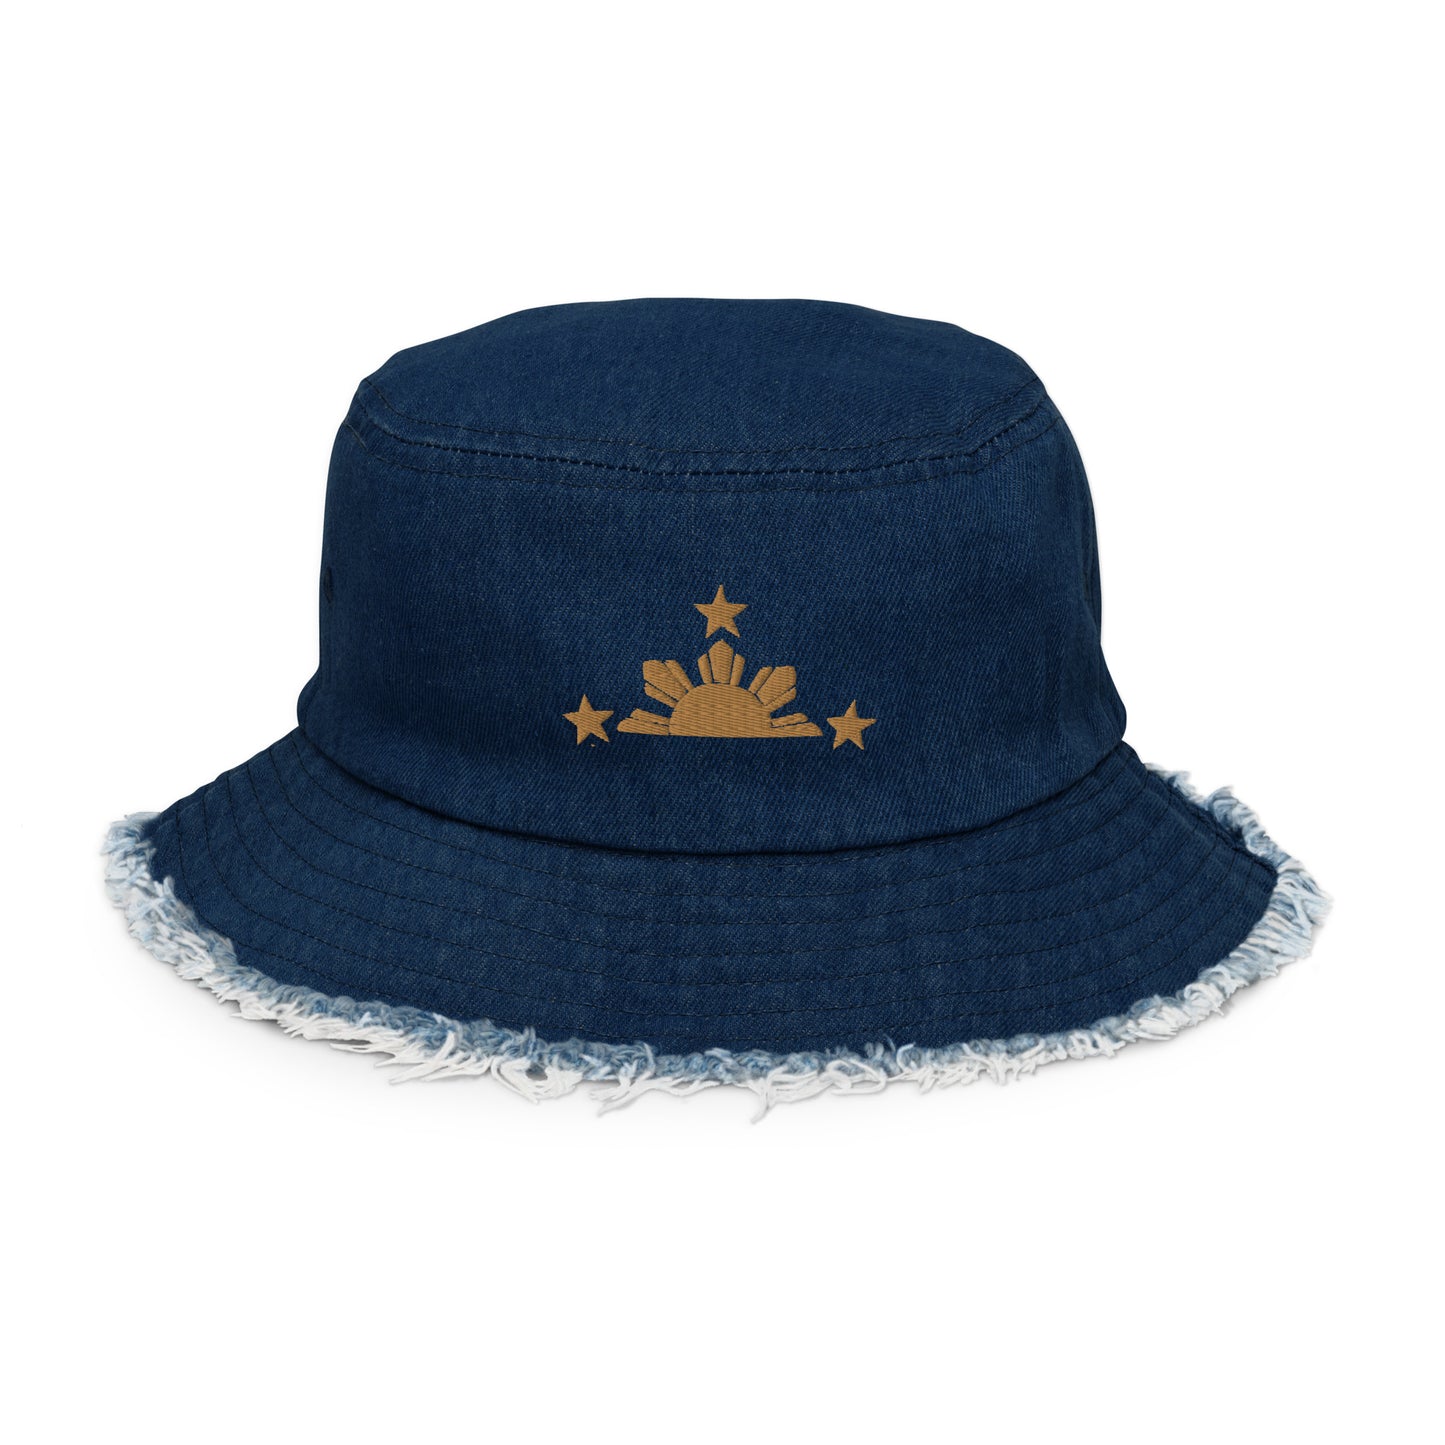 Stars & Sun Pinoy Embroidered Distressed Denim Bucket Hat in variant Classic Denim.